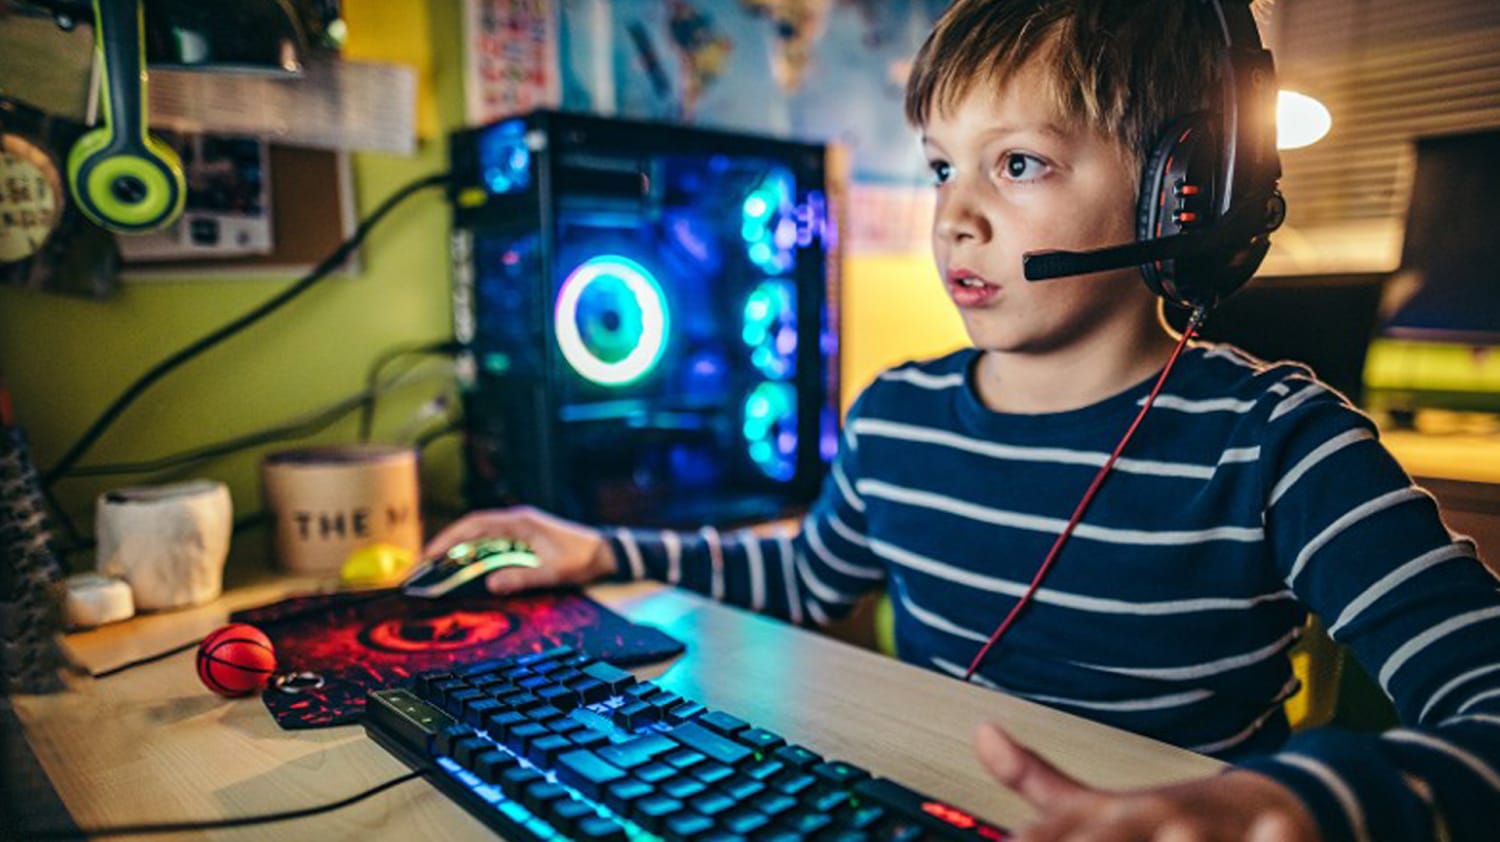 Игра компьютер малышу. Ребенок геймер. Компьютерные игры для детей. Компьютерные игры для детей школьного возраста. Школьник геймер.